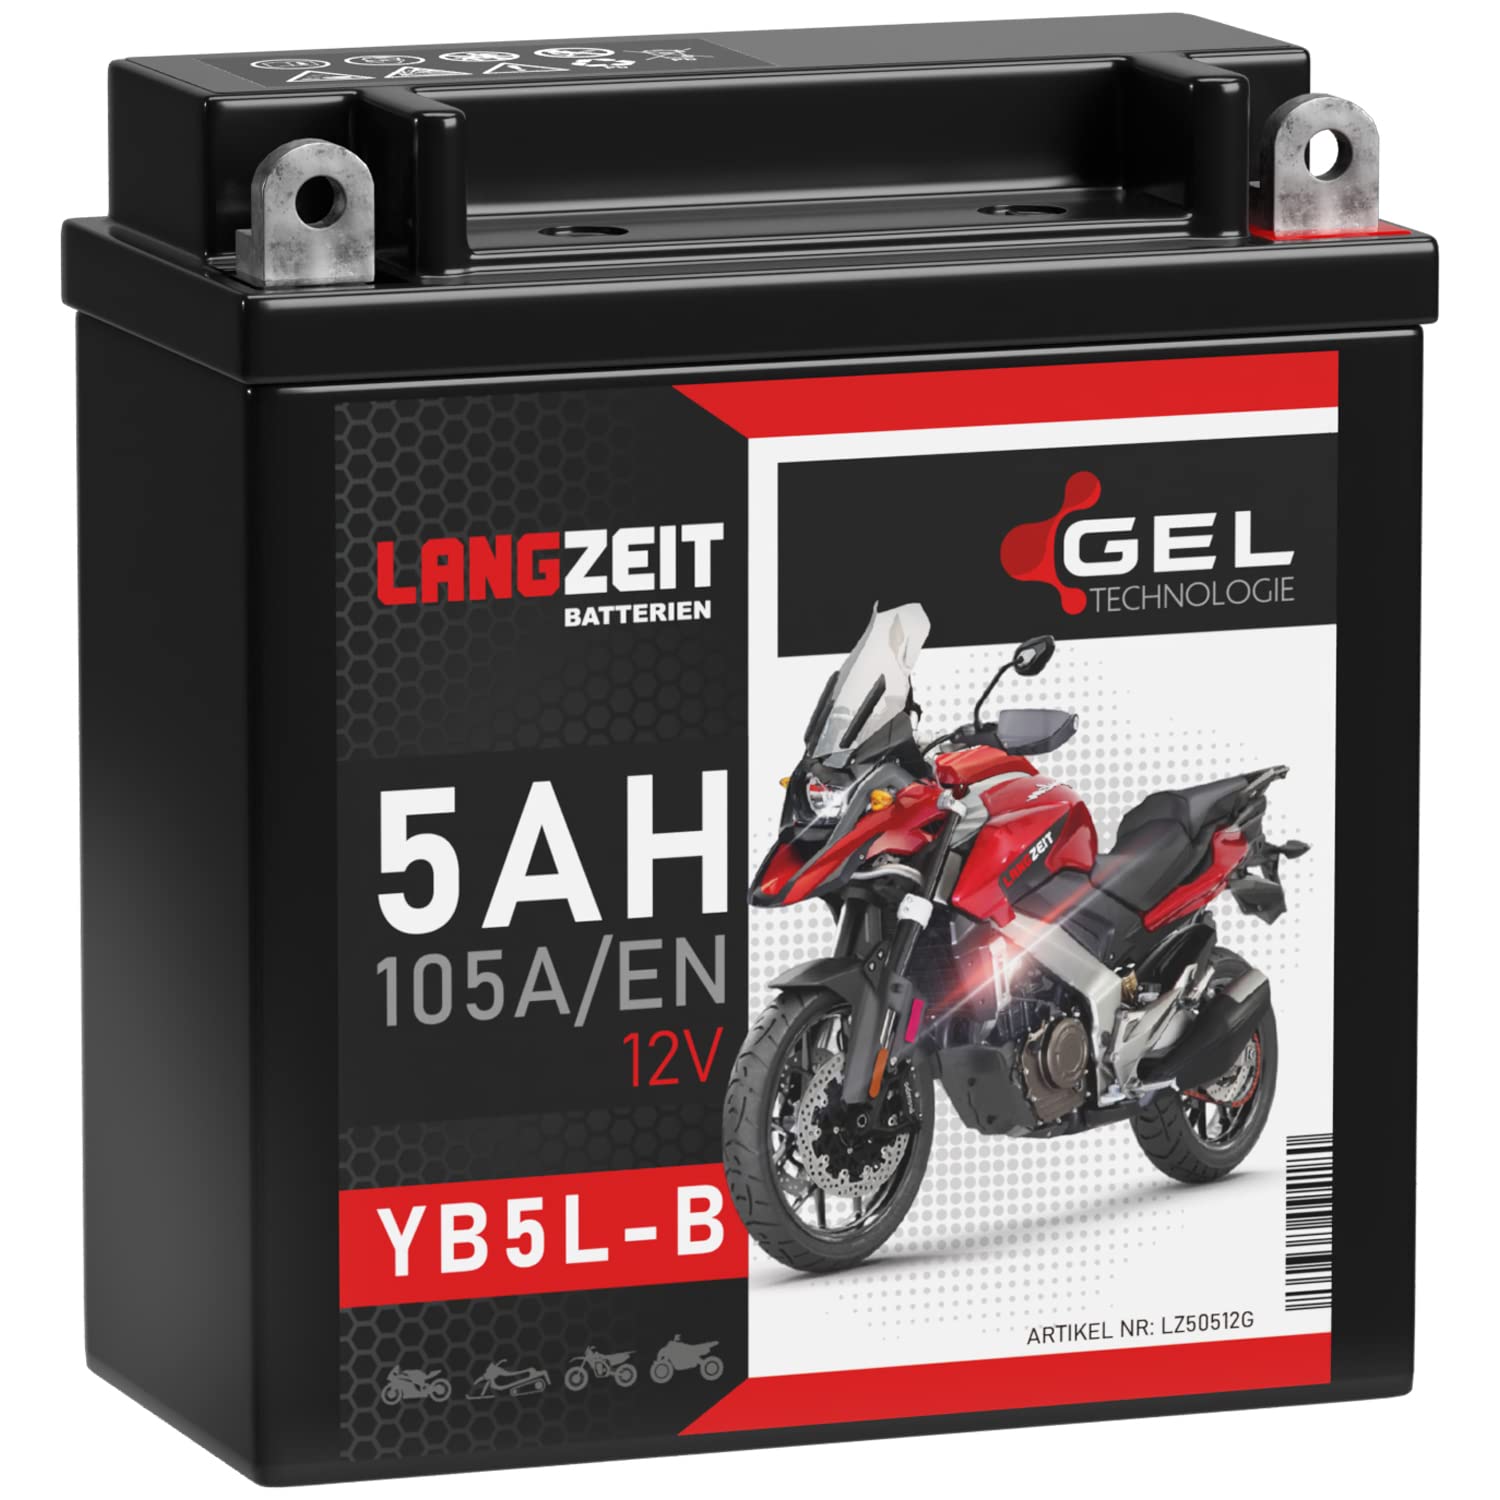 LANGZEIT YB5L-B GEL Motorradbatterie 12V 5Ah 105A/EN Gel Batterie 12V Roller Batterie doppelte Lebensdauer entspricht 50512 CB5L-B 12N5.5-3B vorgeladen auslaufsicher wartungsfrei ersetzt 4Ah von LANGZEIT Batterien